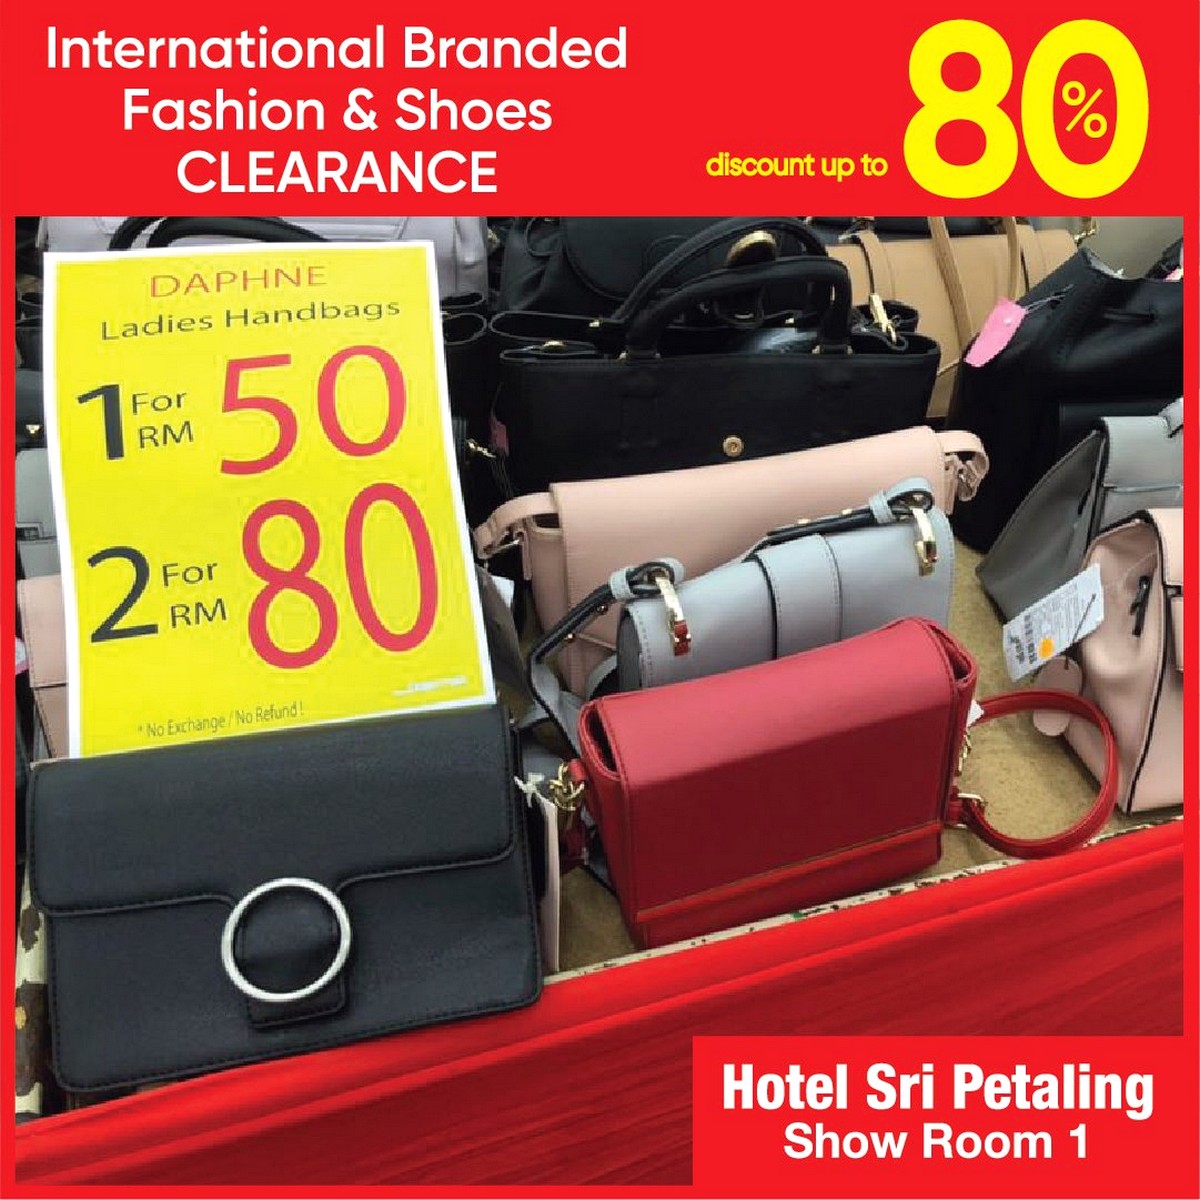 Hotel-Sri-Petaling-Warehouse-Sale-2021-3 - Apparels Fashion Accessories Fashion Lifestyle & Department Store Kuala Lumpur Selangor Warehouse Sale & Clearance in Malaysia 